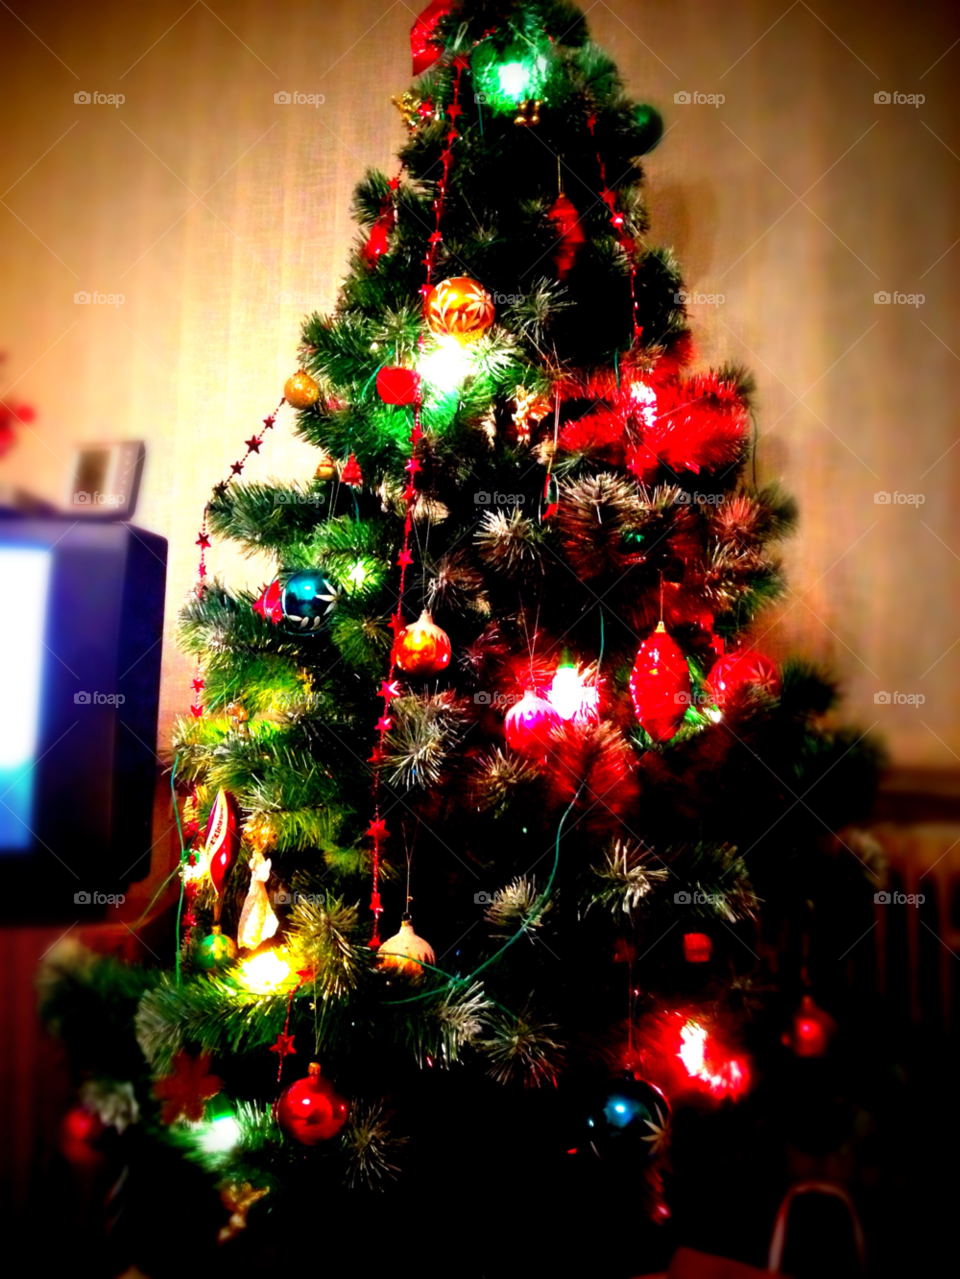 Christmas, Winter, Celebration, Merry, Pine